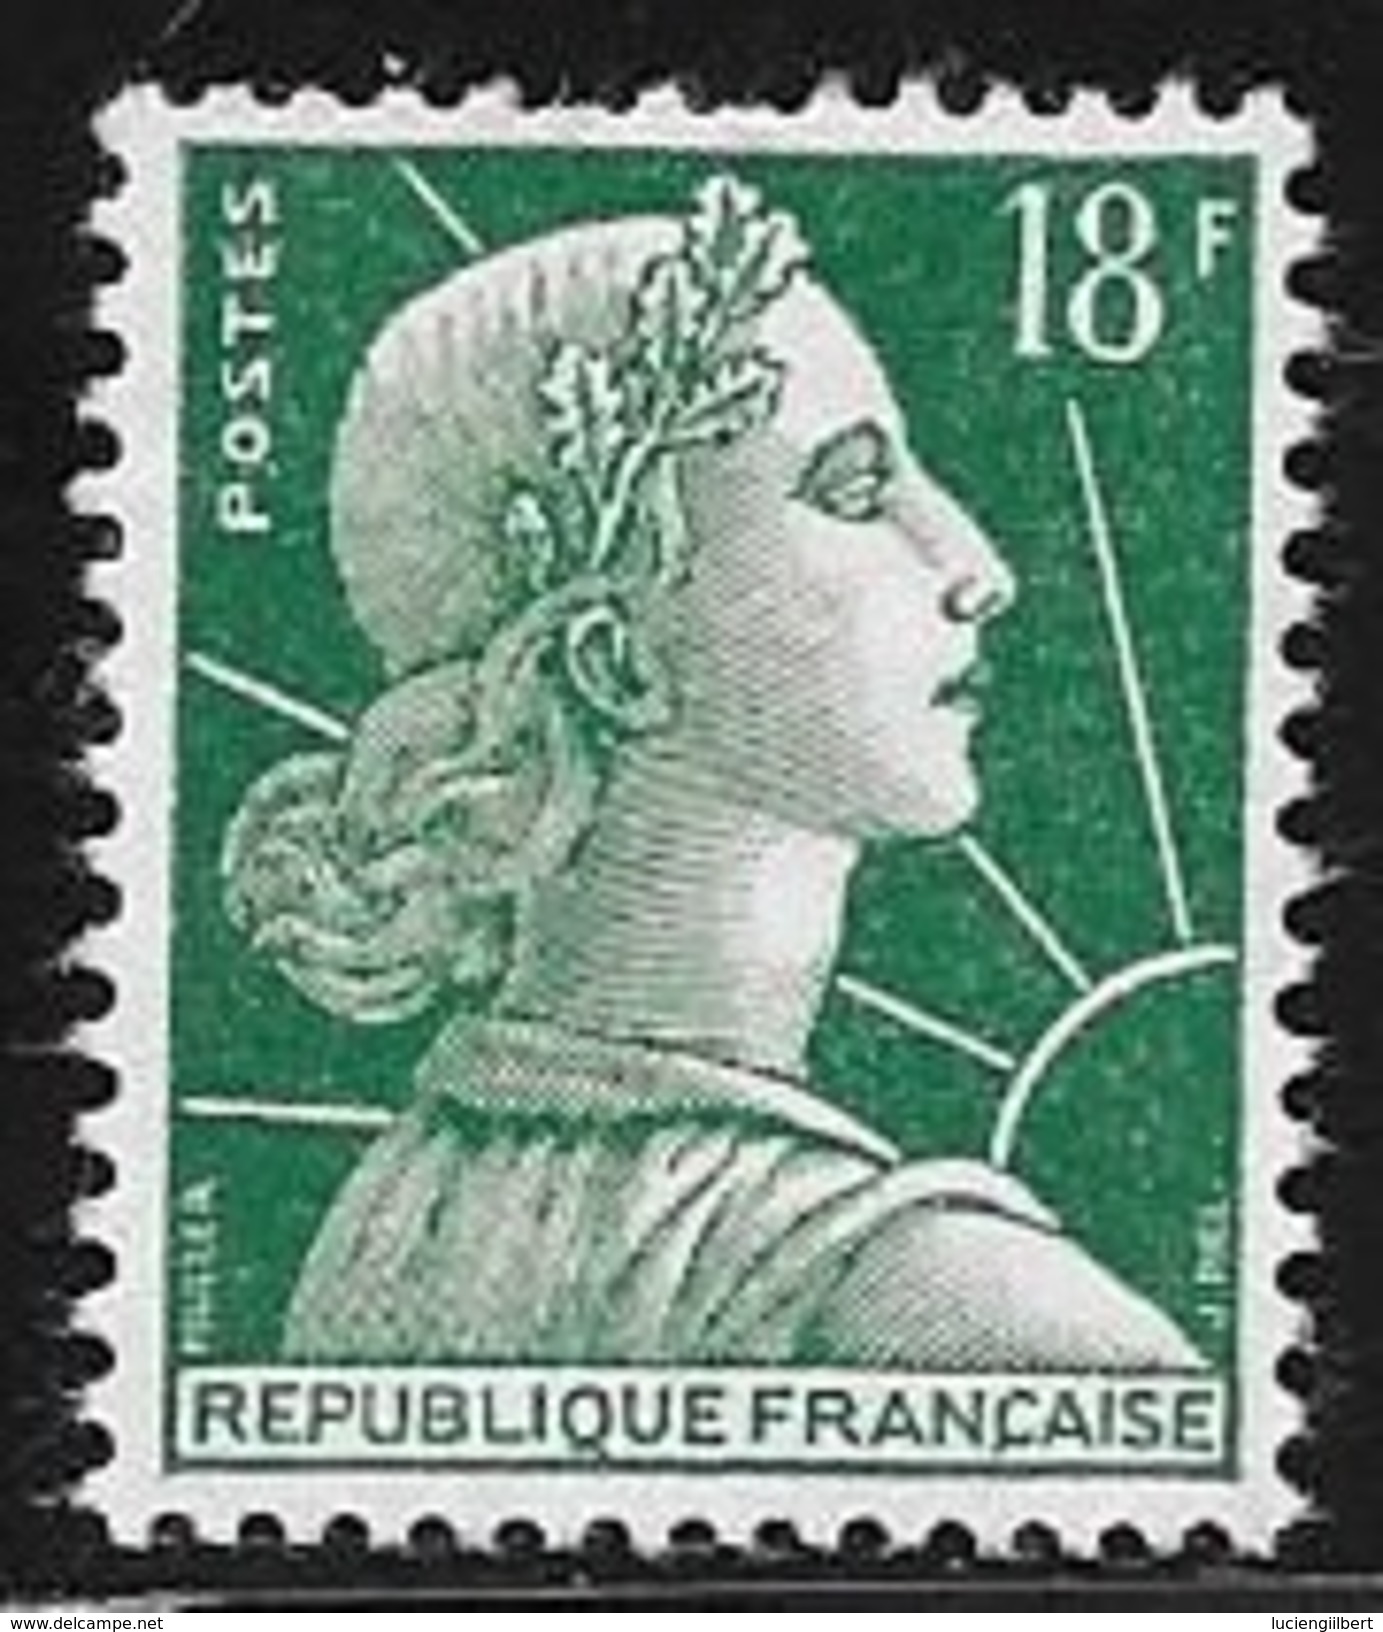 N° 1011 A     FRANCE  -  NEUF  -  18 F   MARIANNE DE MULLER   -  1955 - Ungebraucht